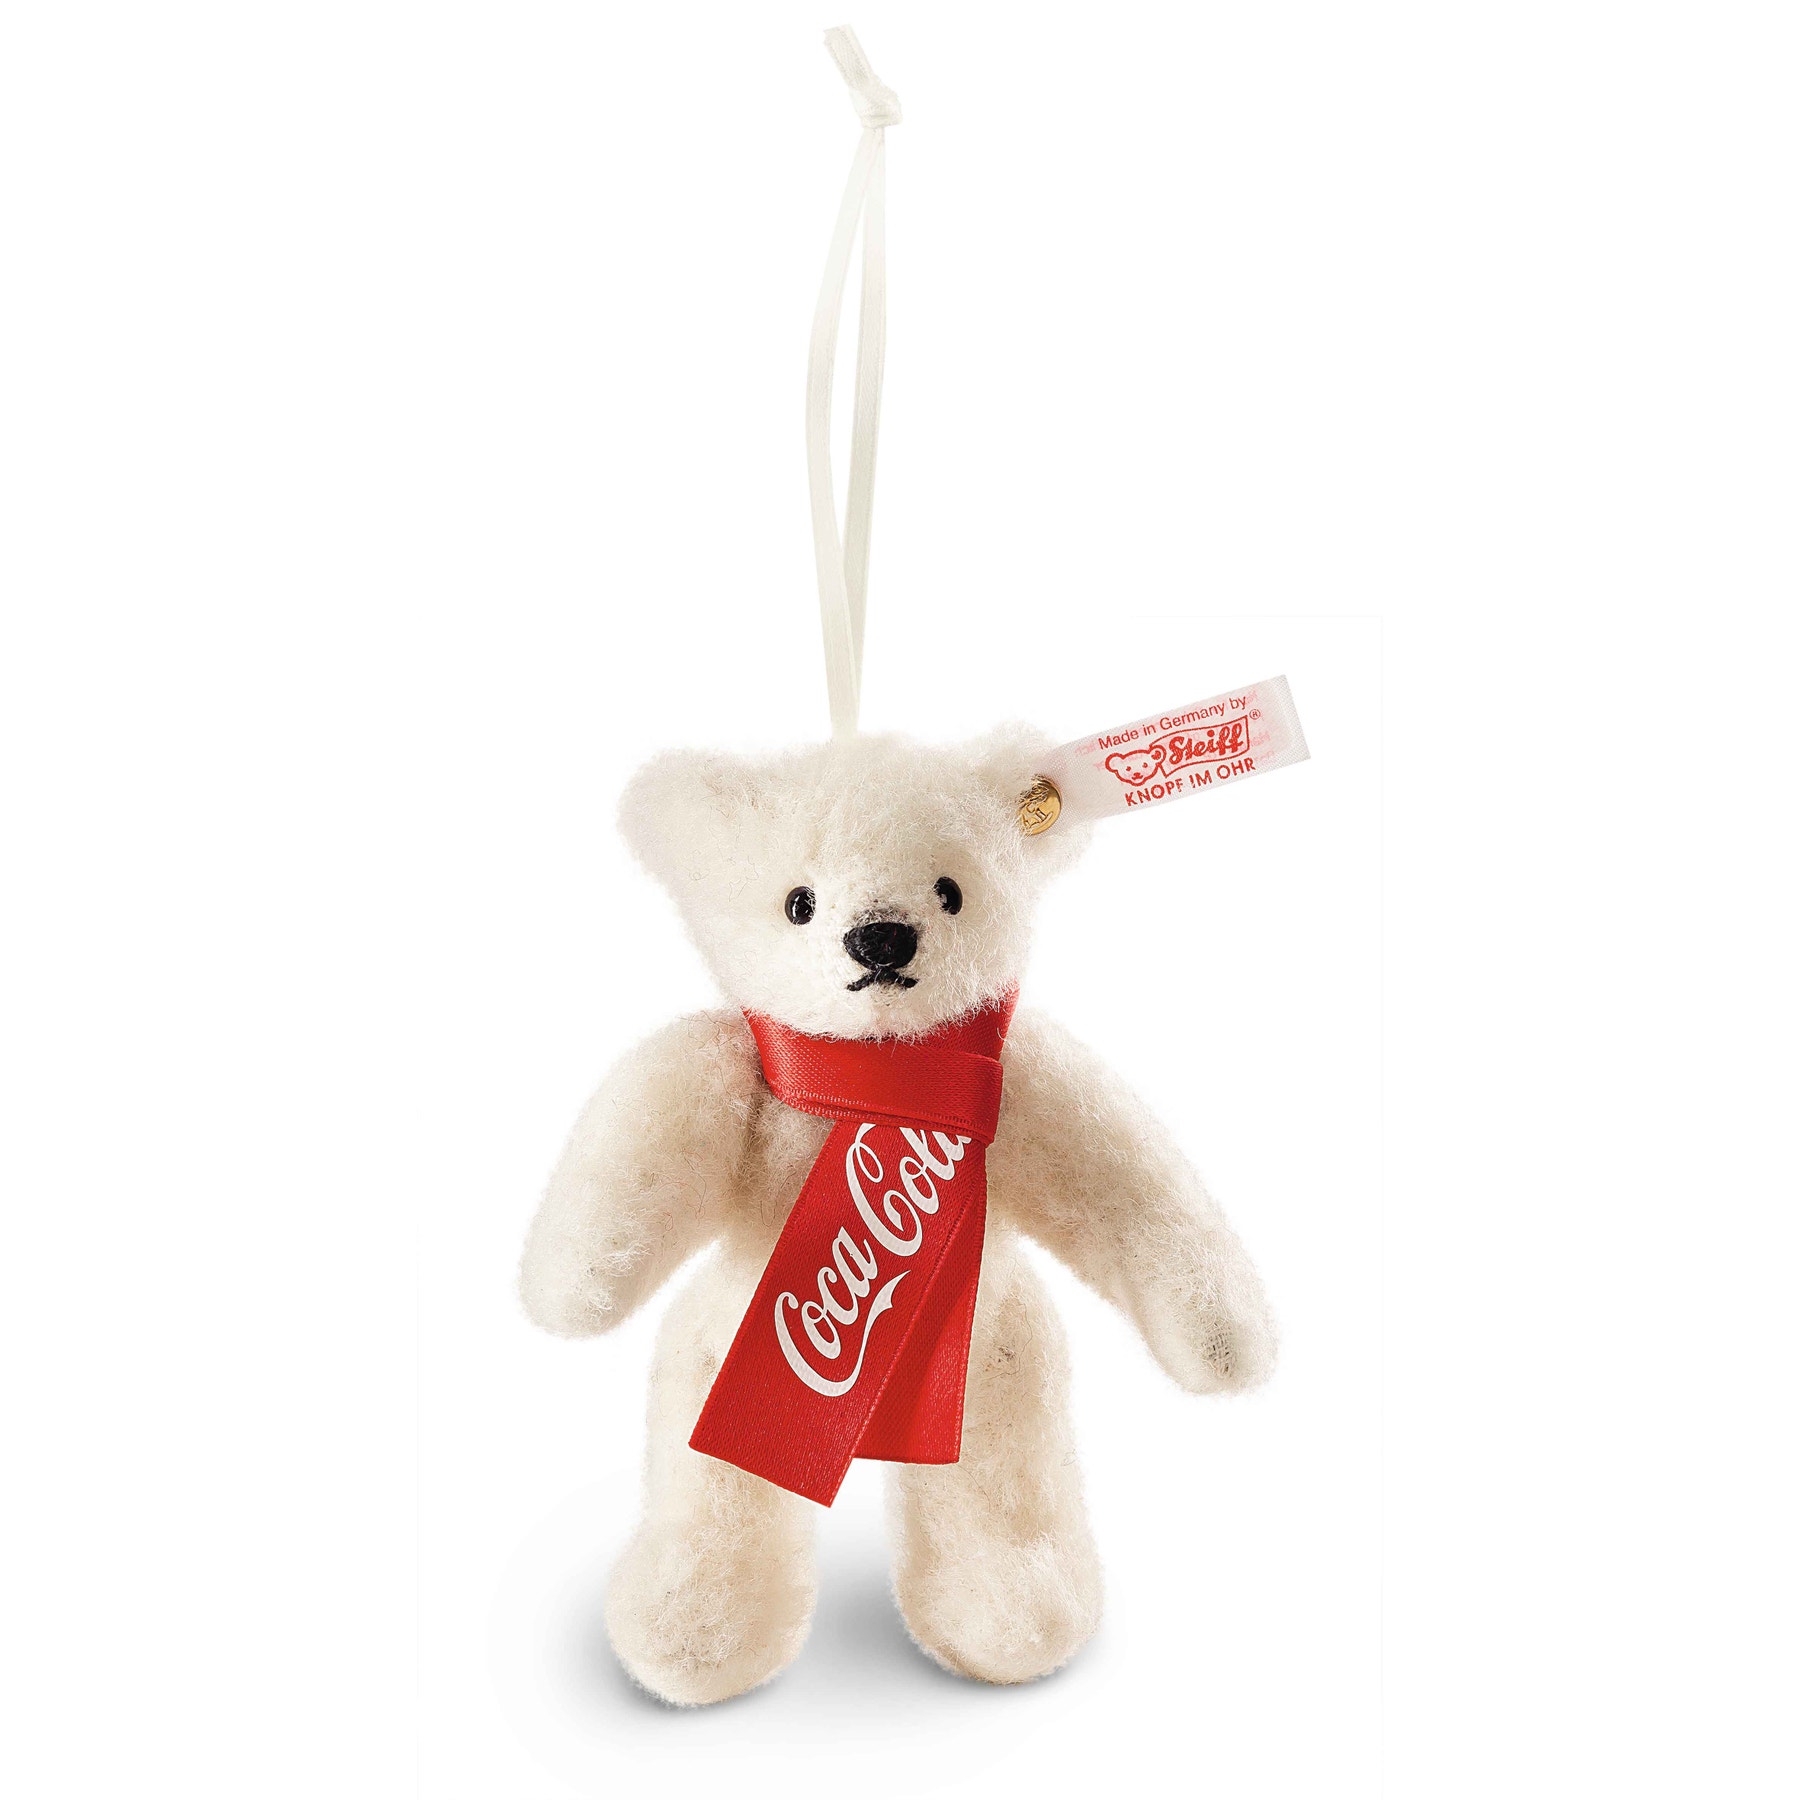 Coca-Cola polar bear ornament